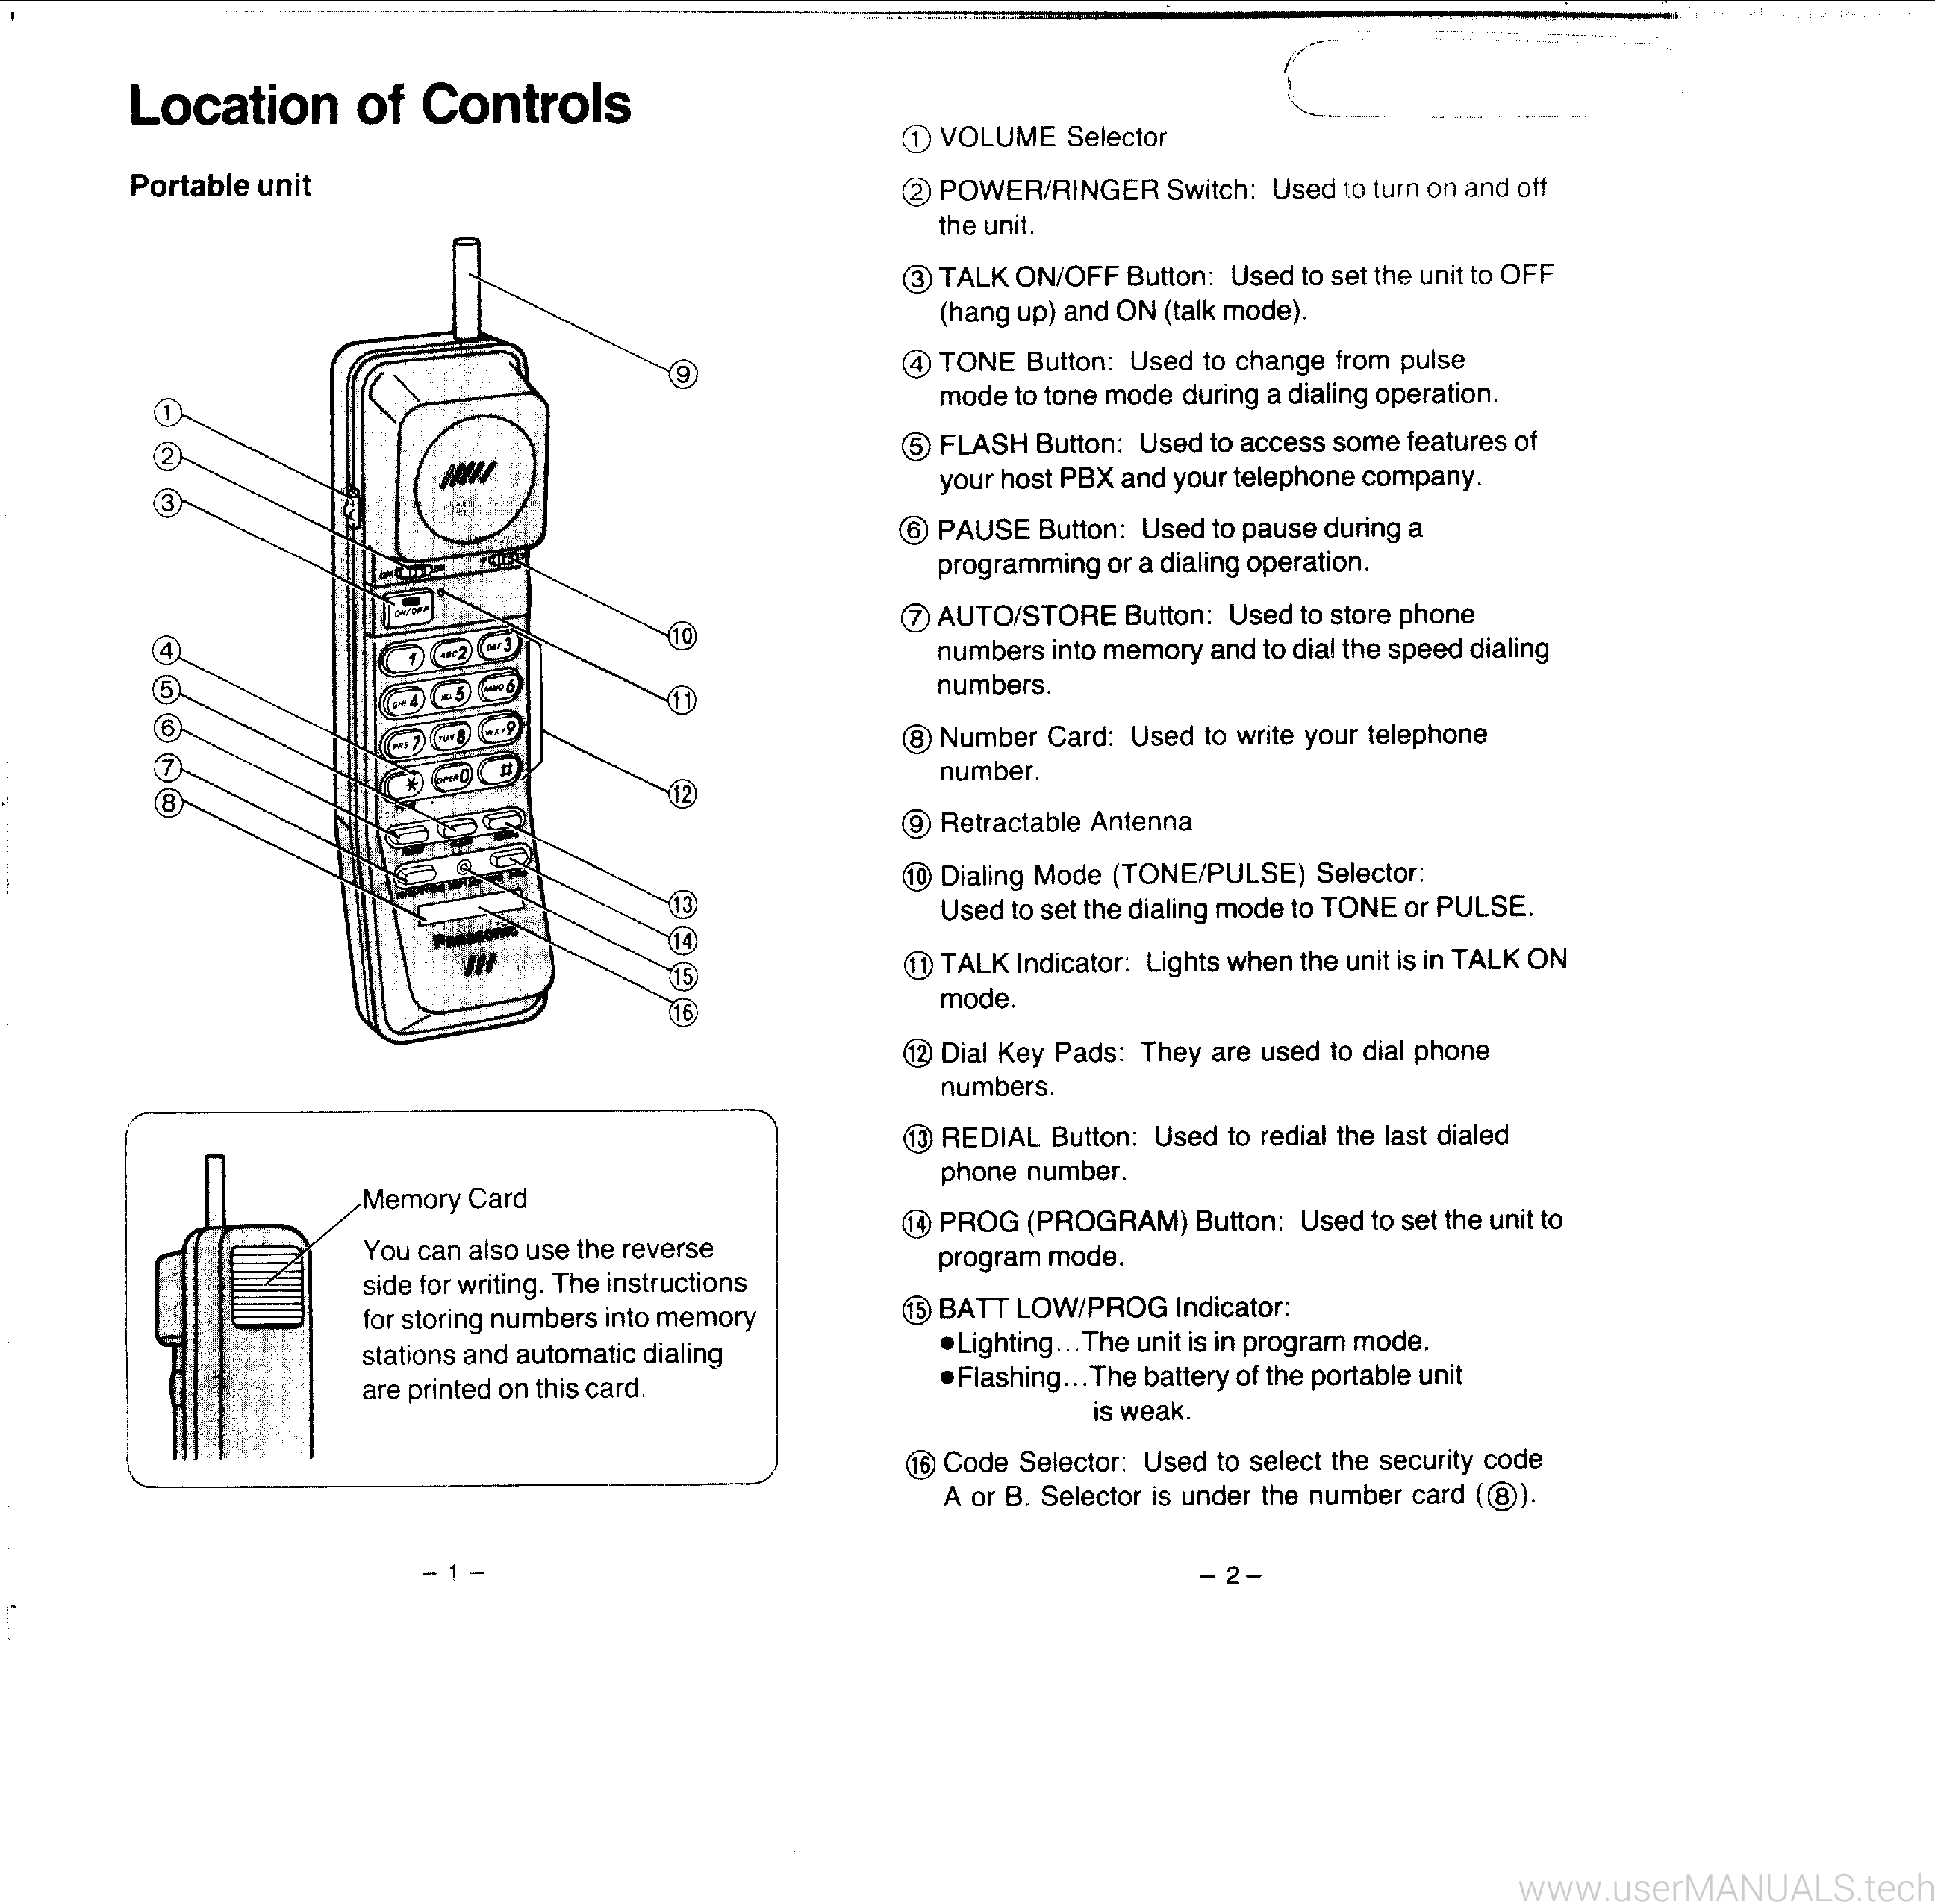 Panasonic Kx T3620 Operating Instructions Manual